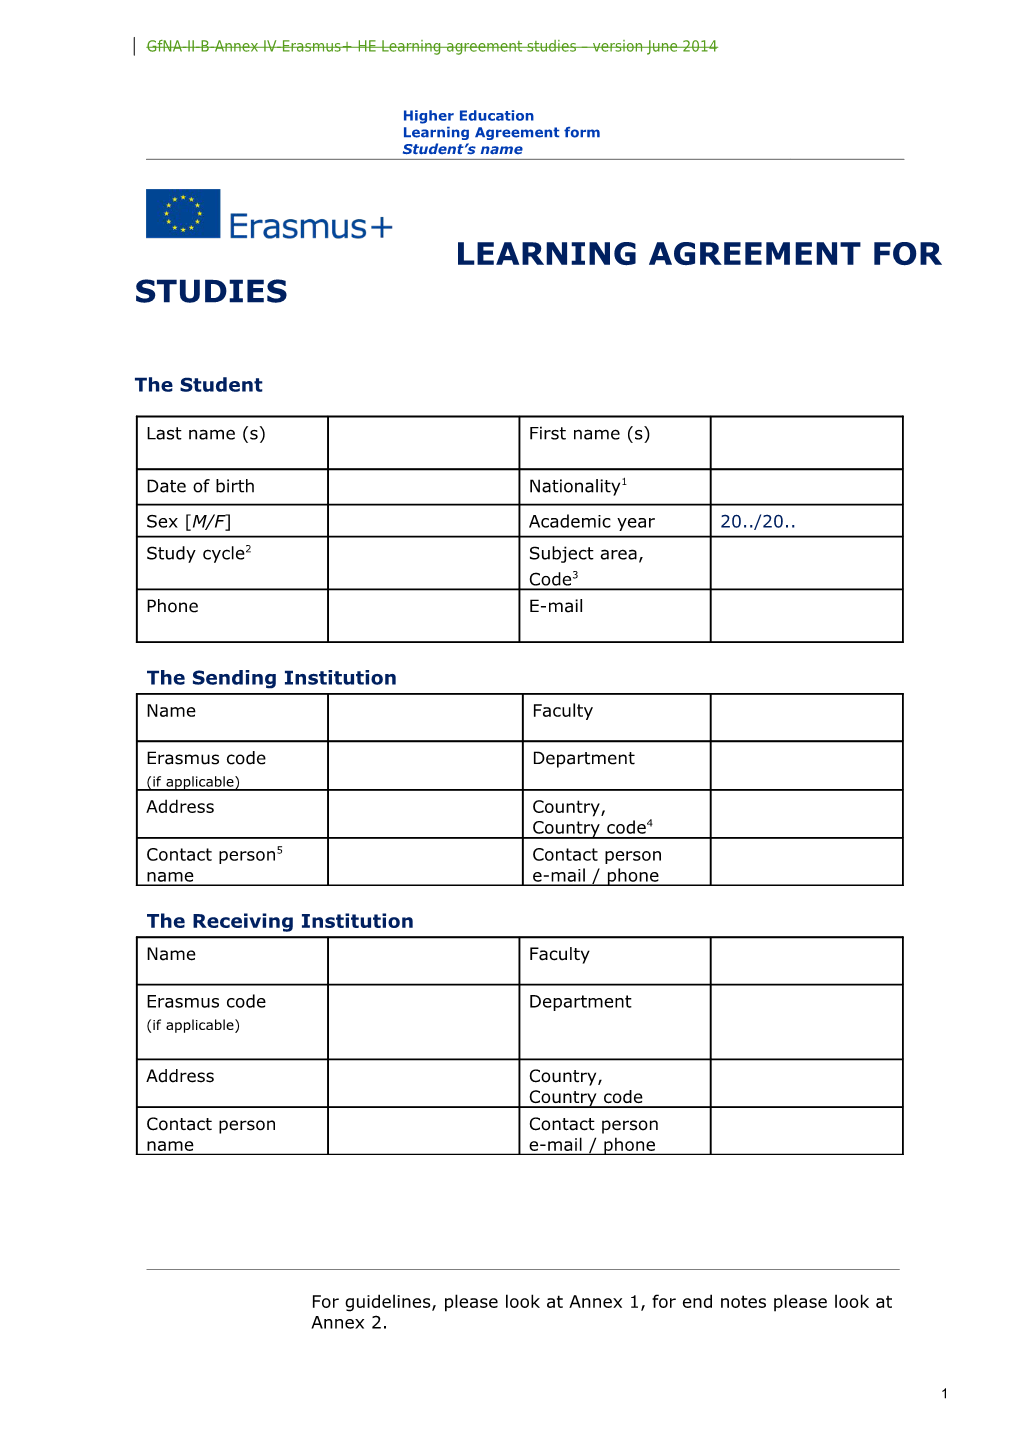 Gfna-II-B-Annex IV-Erasmus+ HE Learning Agreement Studies Version June 2014